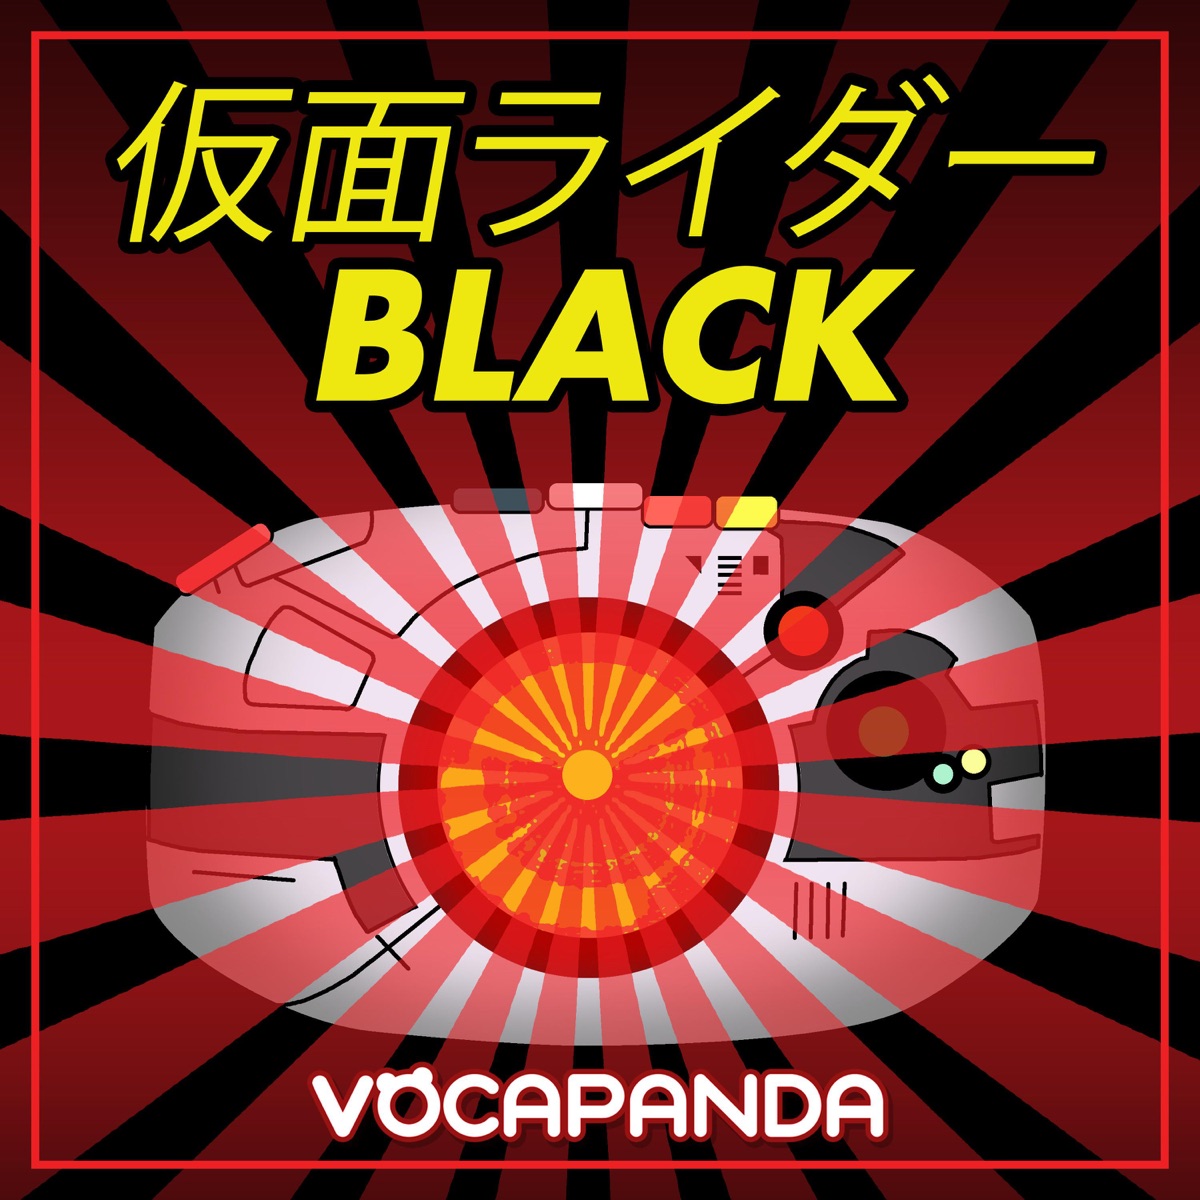 Baka Mitai (Dame Da Ne) [From Yakuza] [Female Version] - Single - Album  by Vocapanda - Apple Music